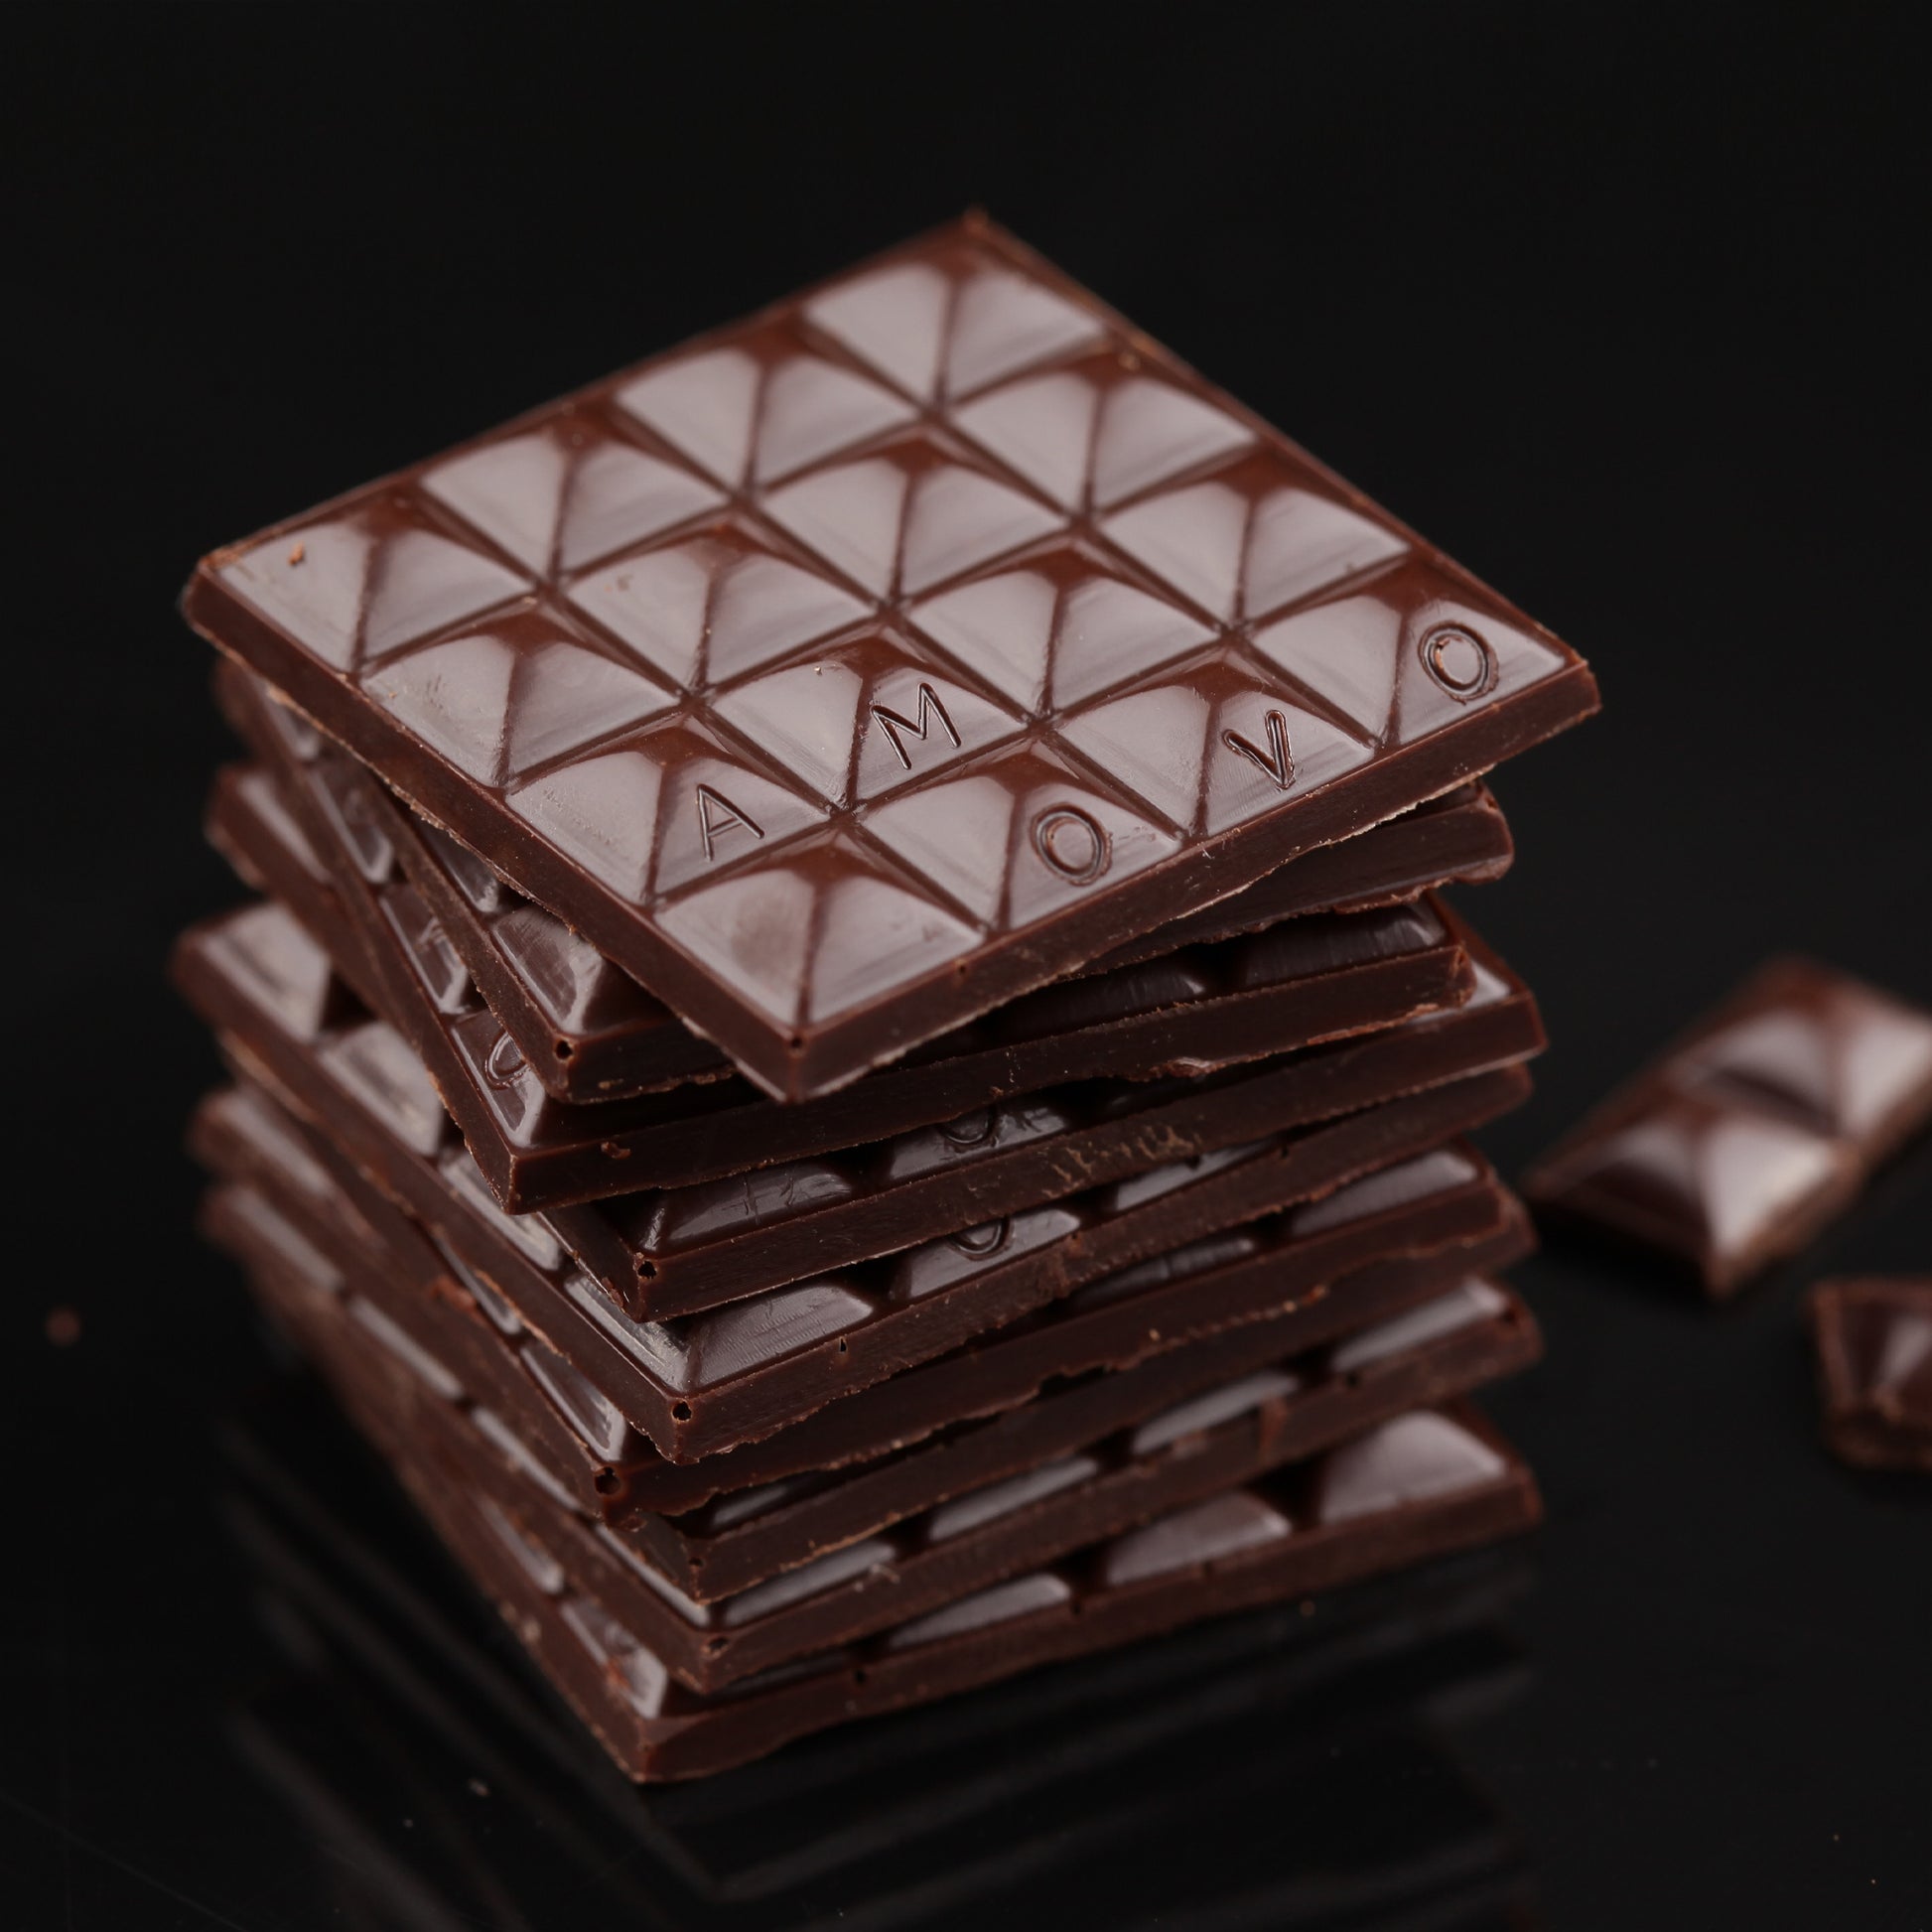 Amotrio Couverture Dark Chocolate 88% chocolate pieces